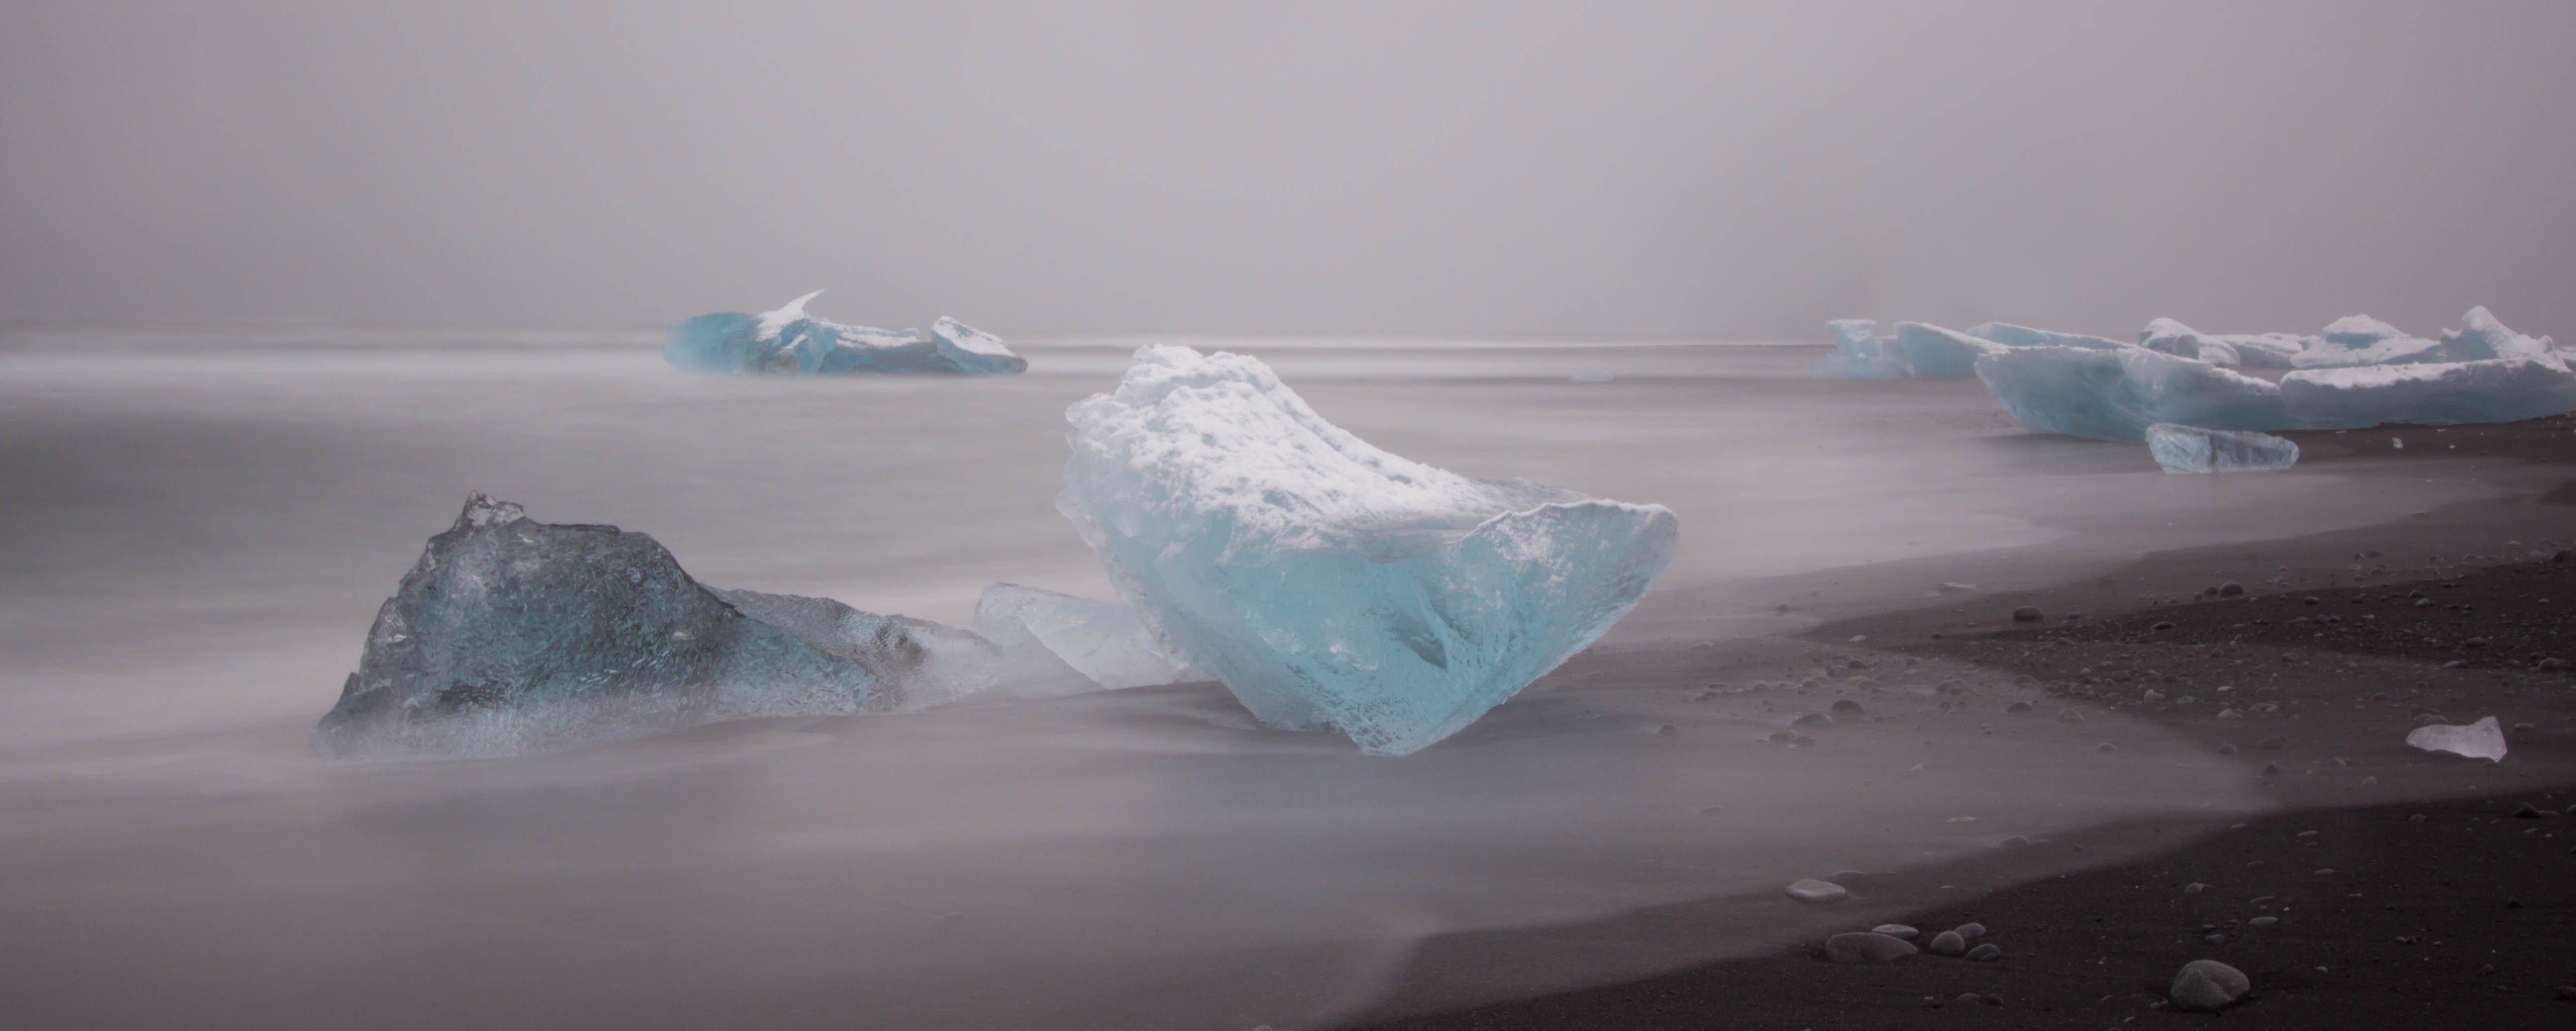 Iceland Icebergs on a Black Volcanic Sand Beach and a